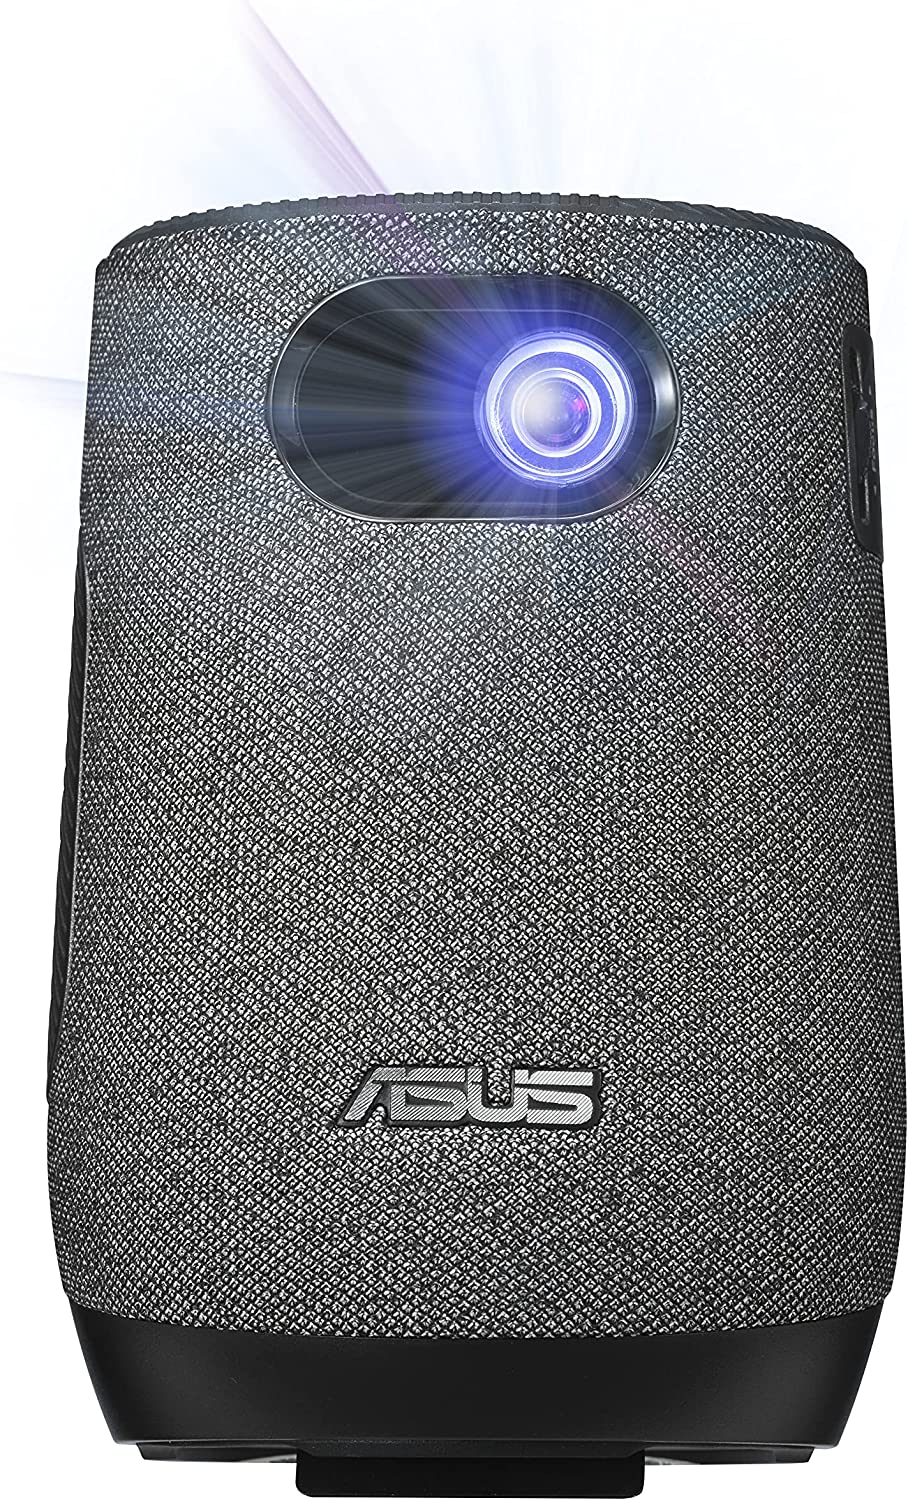 Asus ZenBeam Latte L1 Projecteur LED Portable Bluetooth WiFi - Harman Kardon Audio - HDMI, USB - 300 Lumens